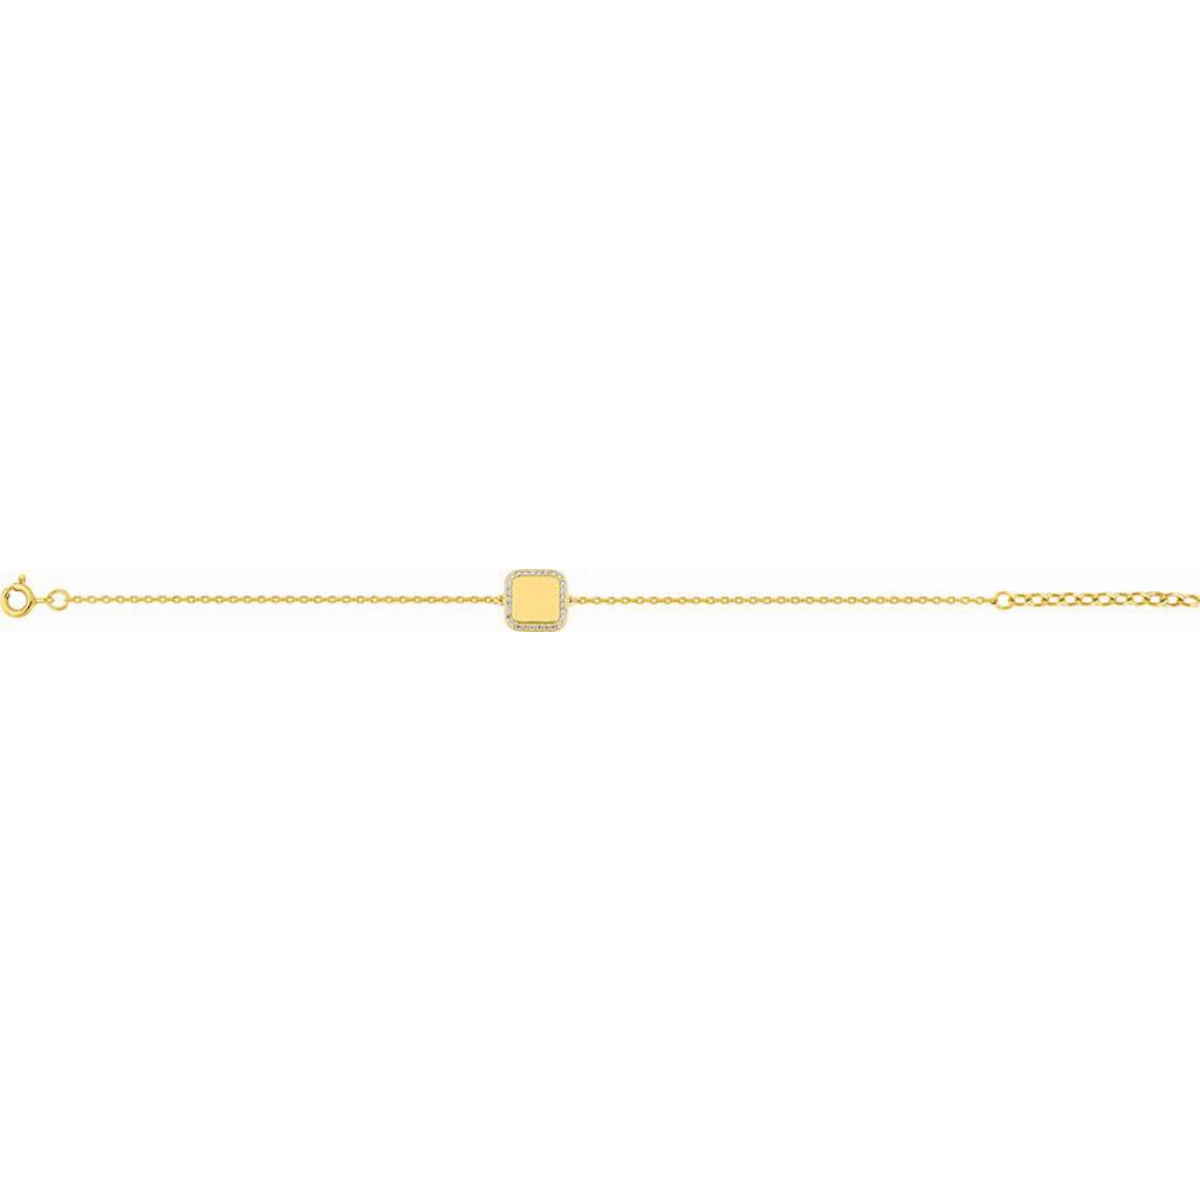 Bracelet with cz gold plated Brass Lua Blanca  256913.9